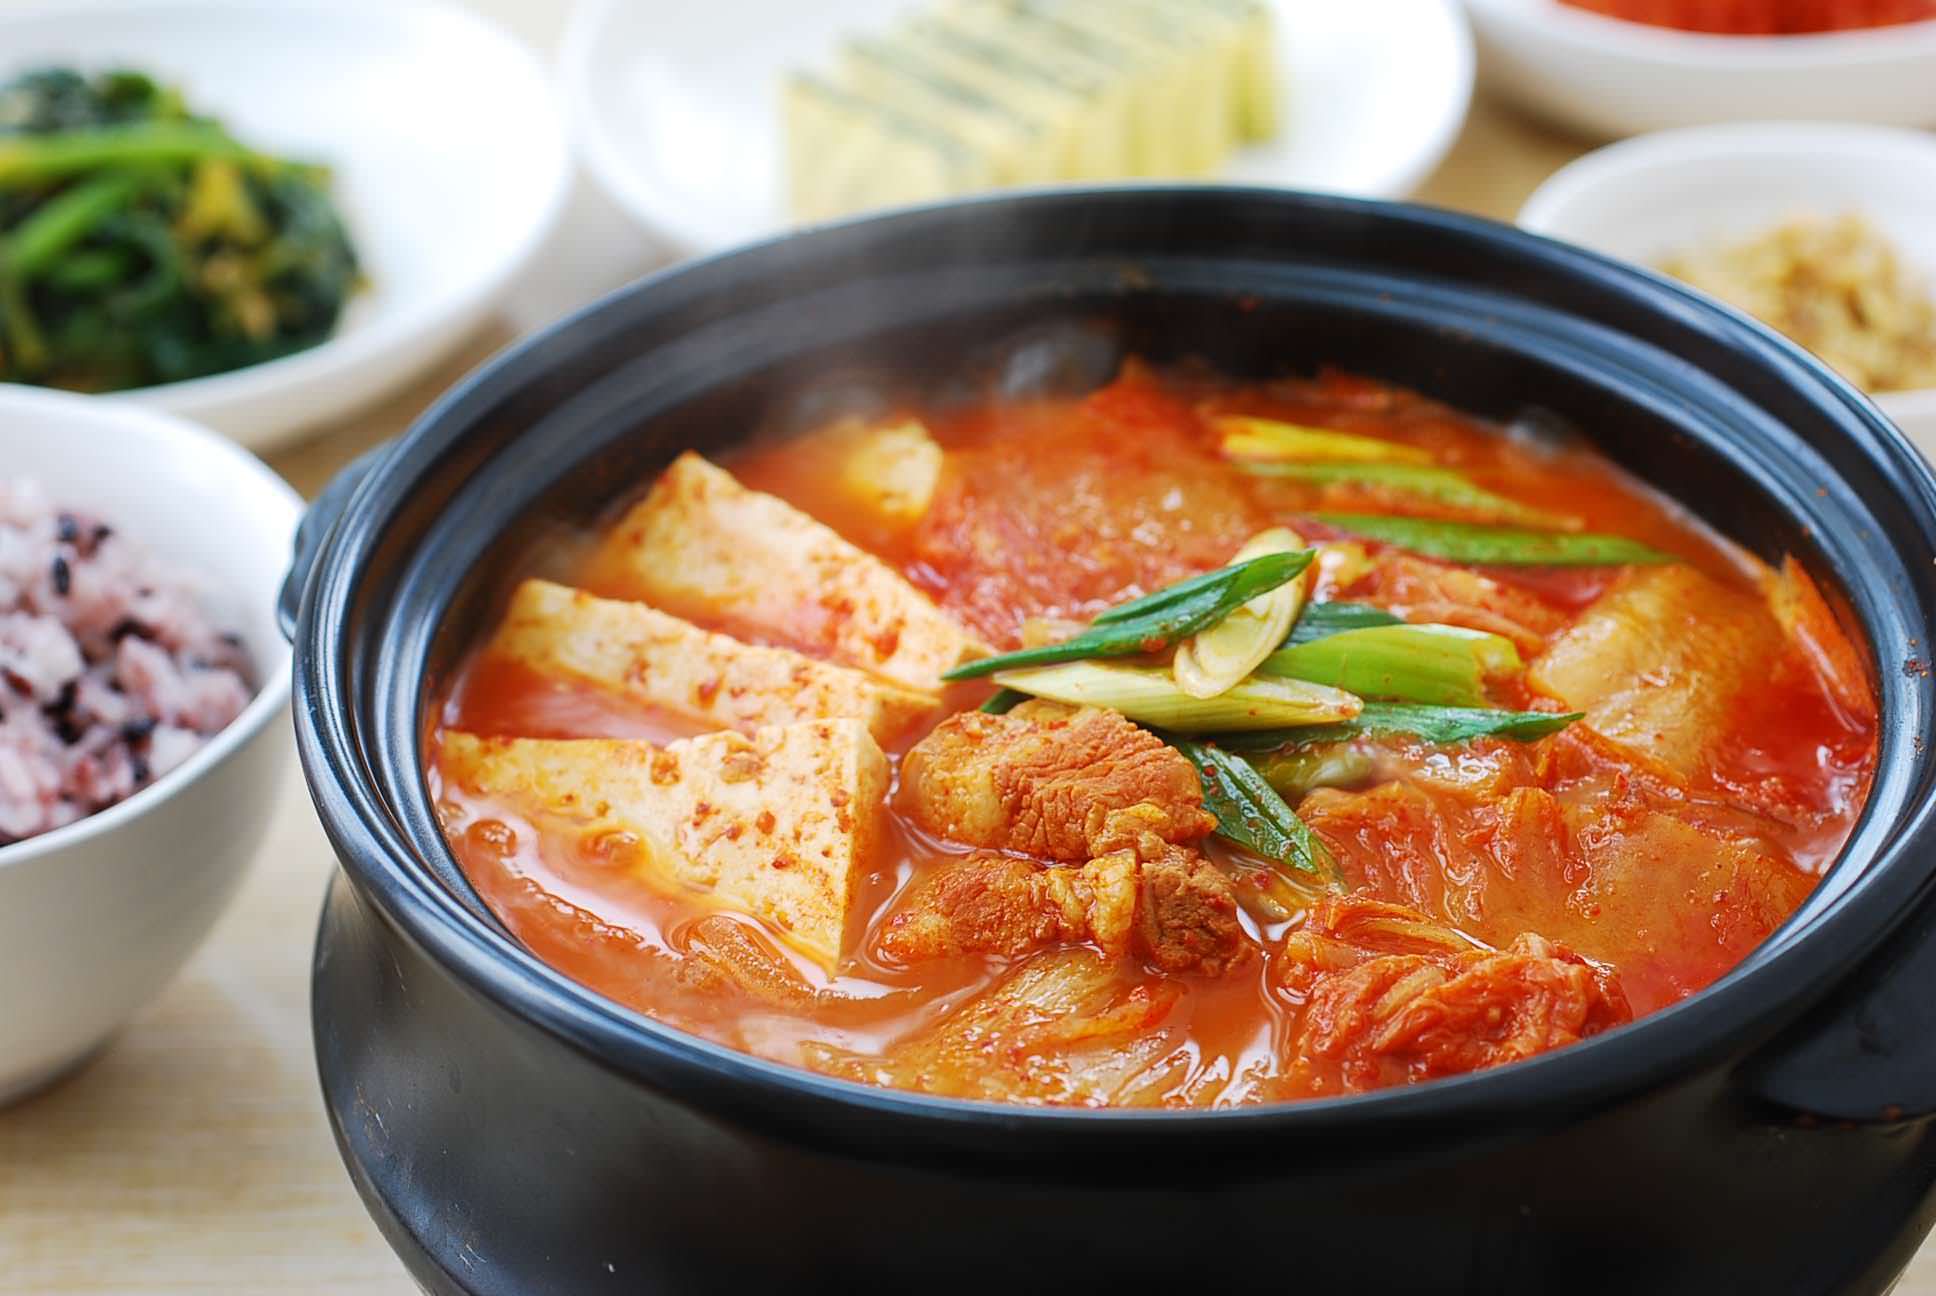 Kimchi jjigae (stew)